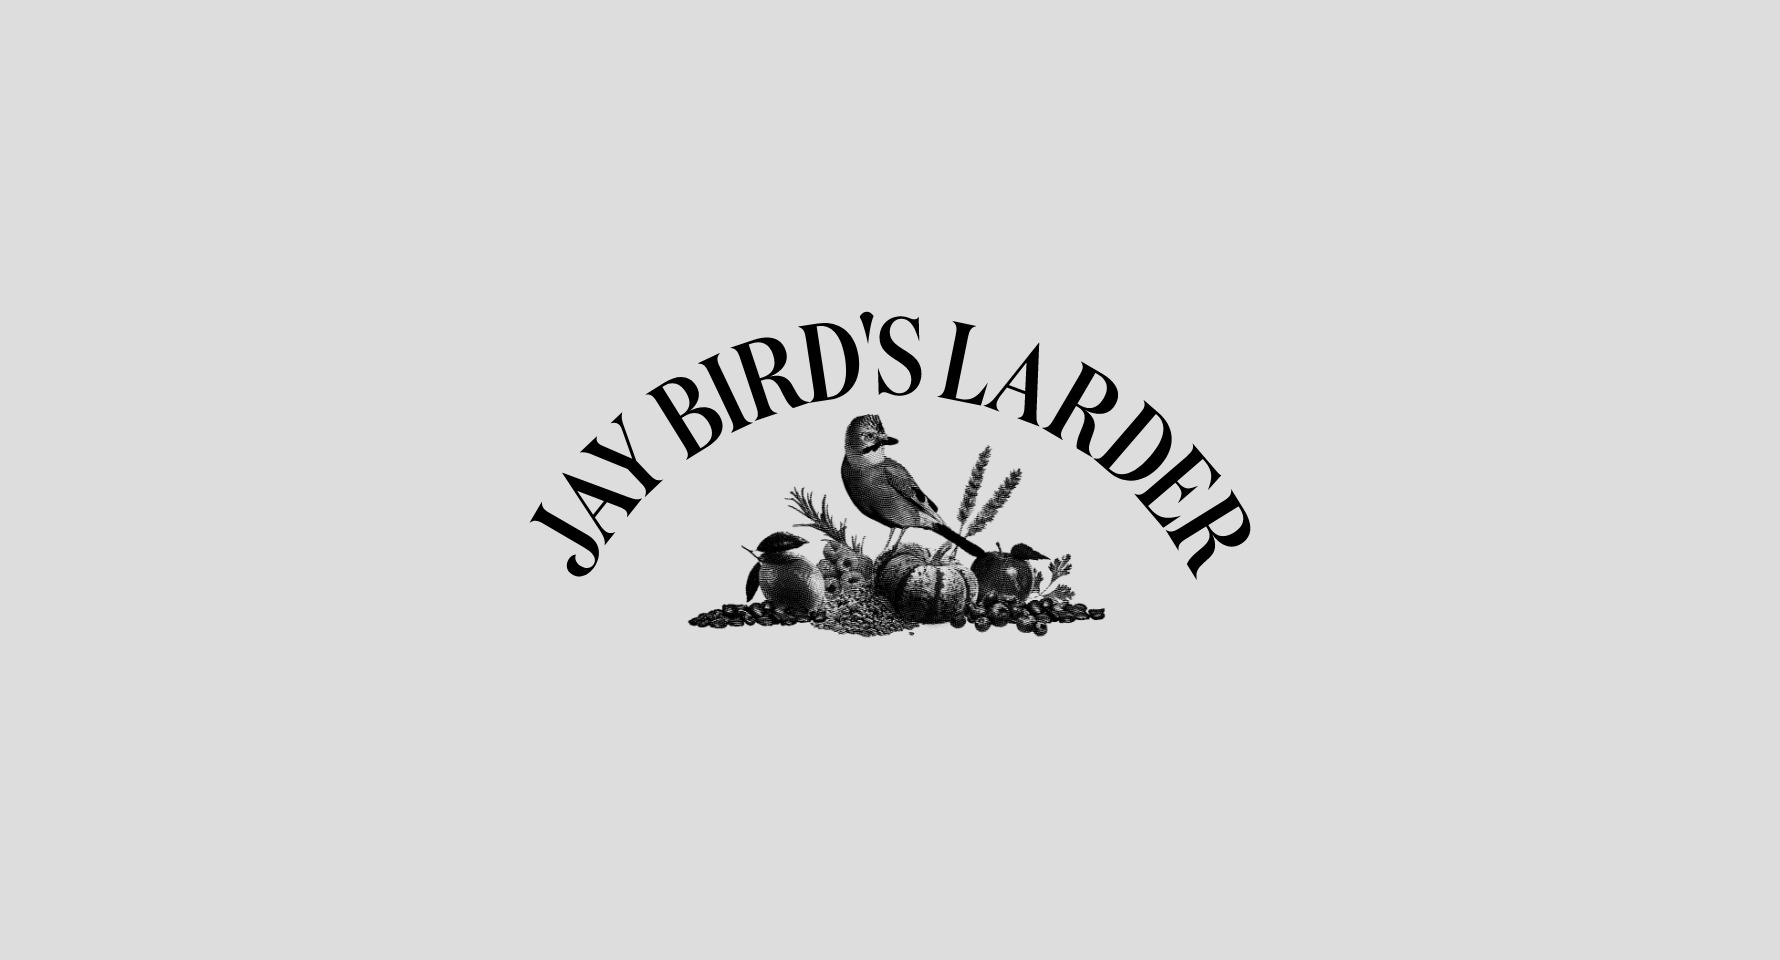 Jay Bird’s Larder